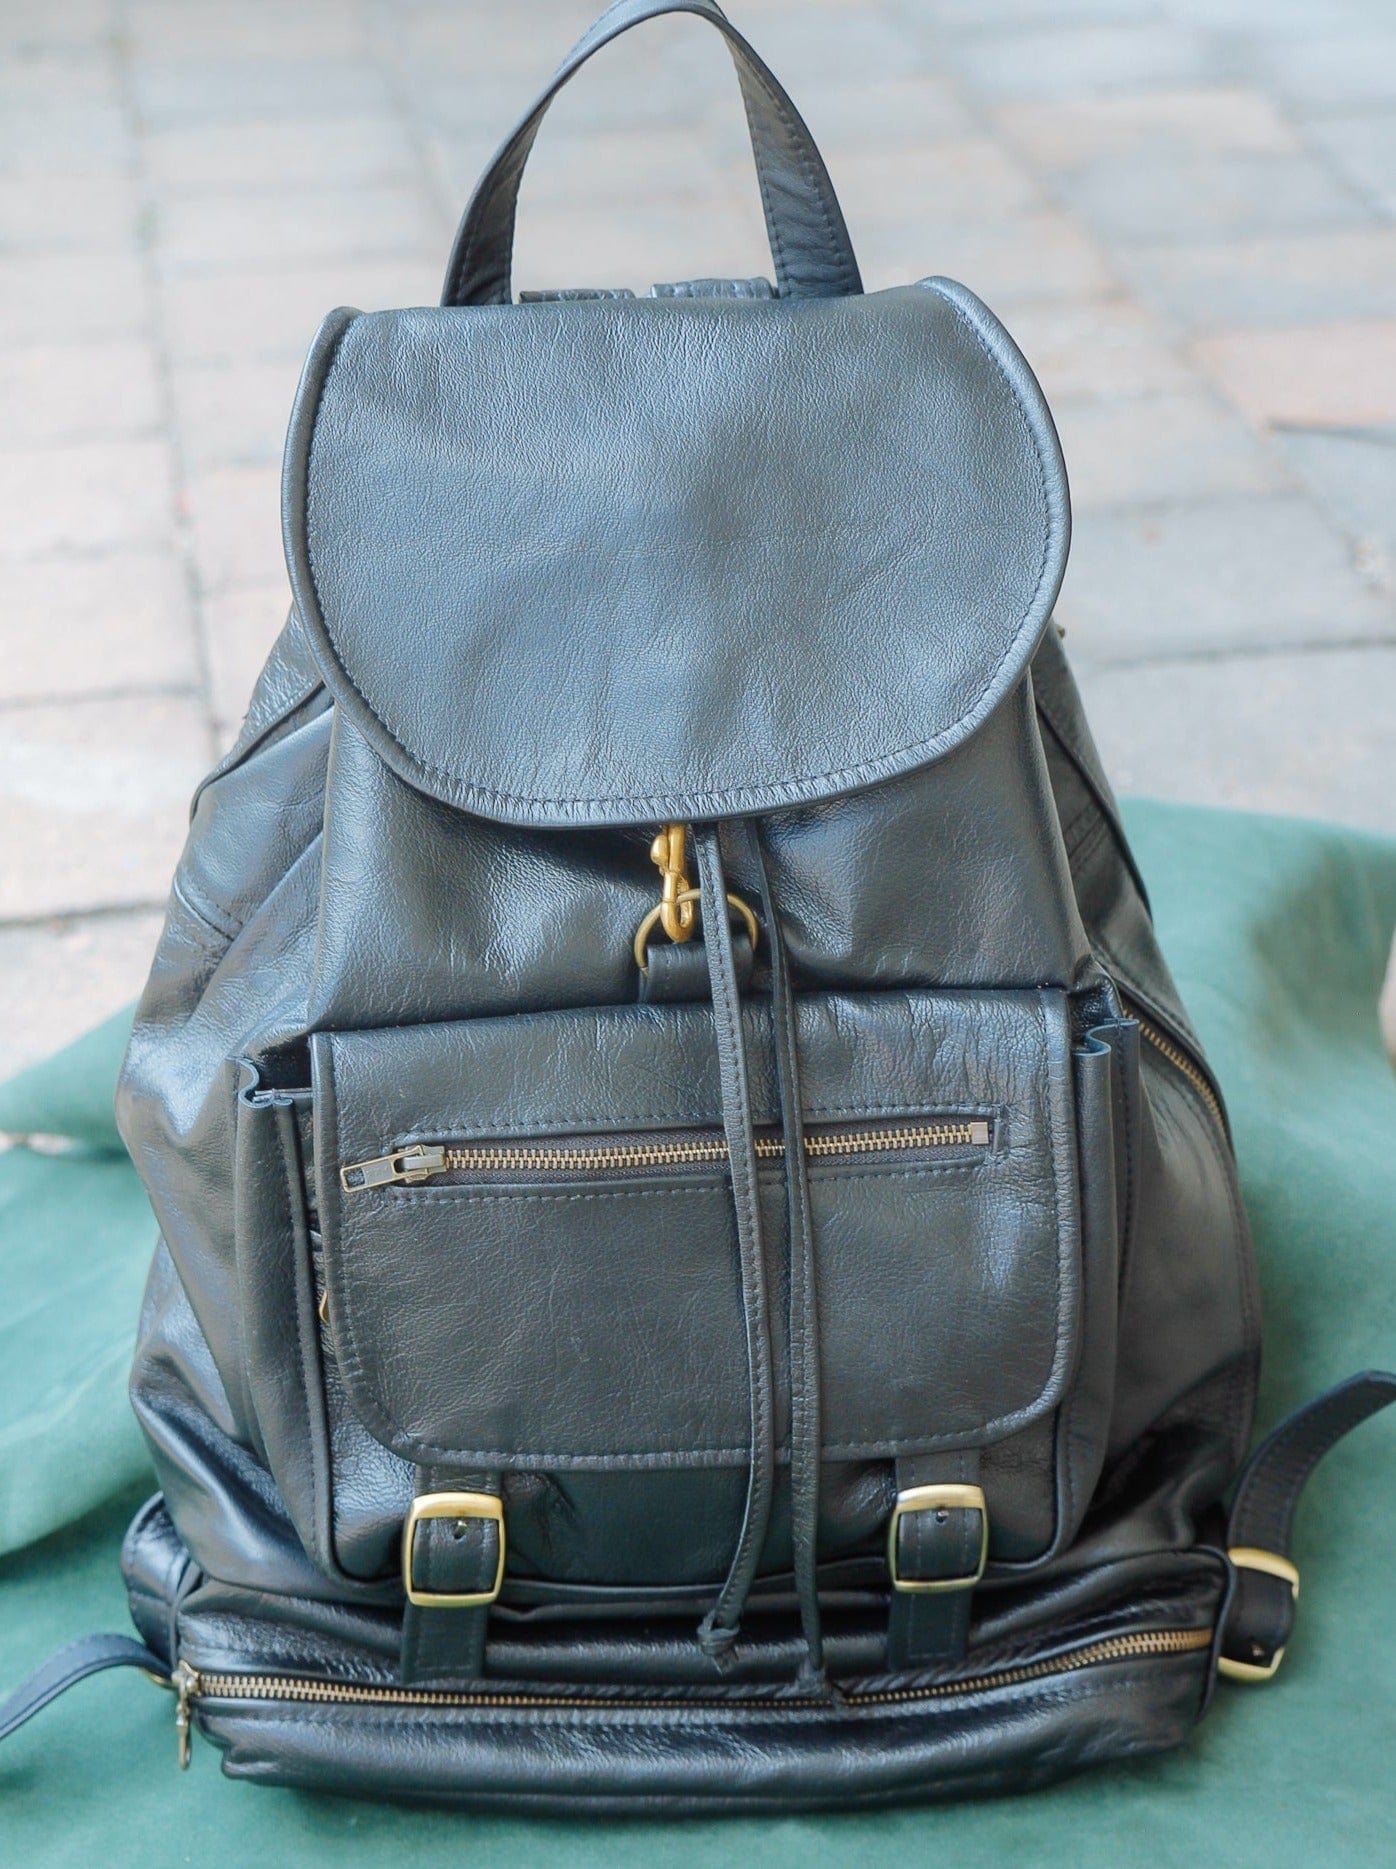 The Real McCaul Back Packs Black Shiny Large Deluxe Travel Laptop Backpack - Kangaroo Australian Made Australian Owned Leather Laptop/Travel Backpack Handmade in Australia- Kangaroo & Cowhide Leather